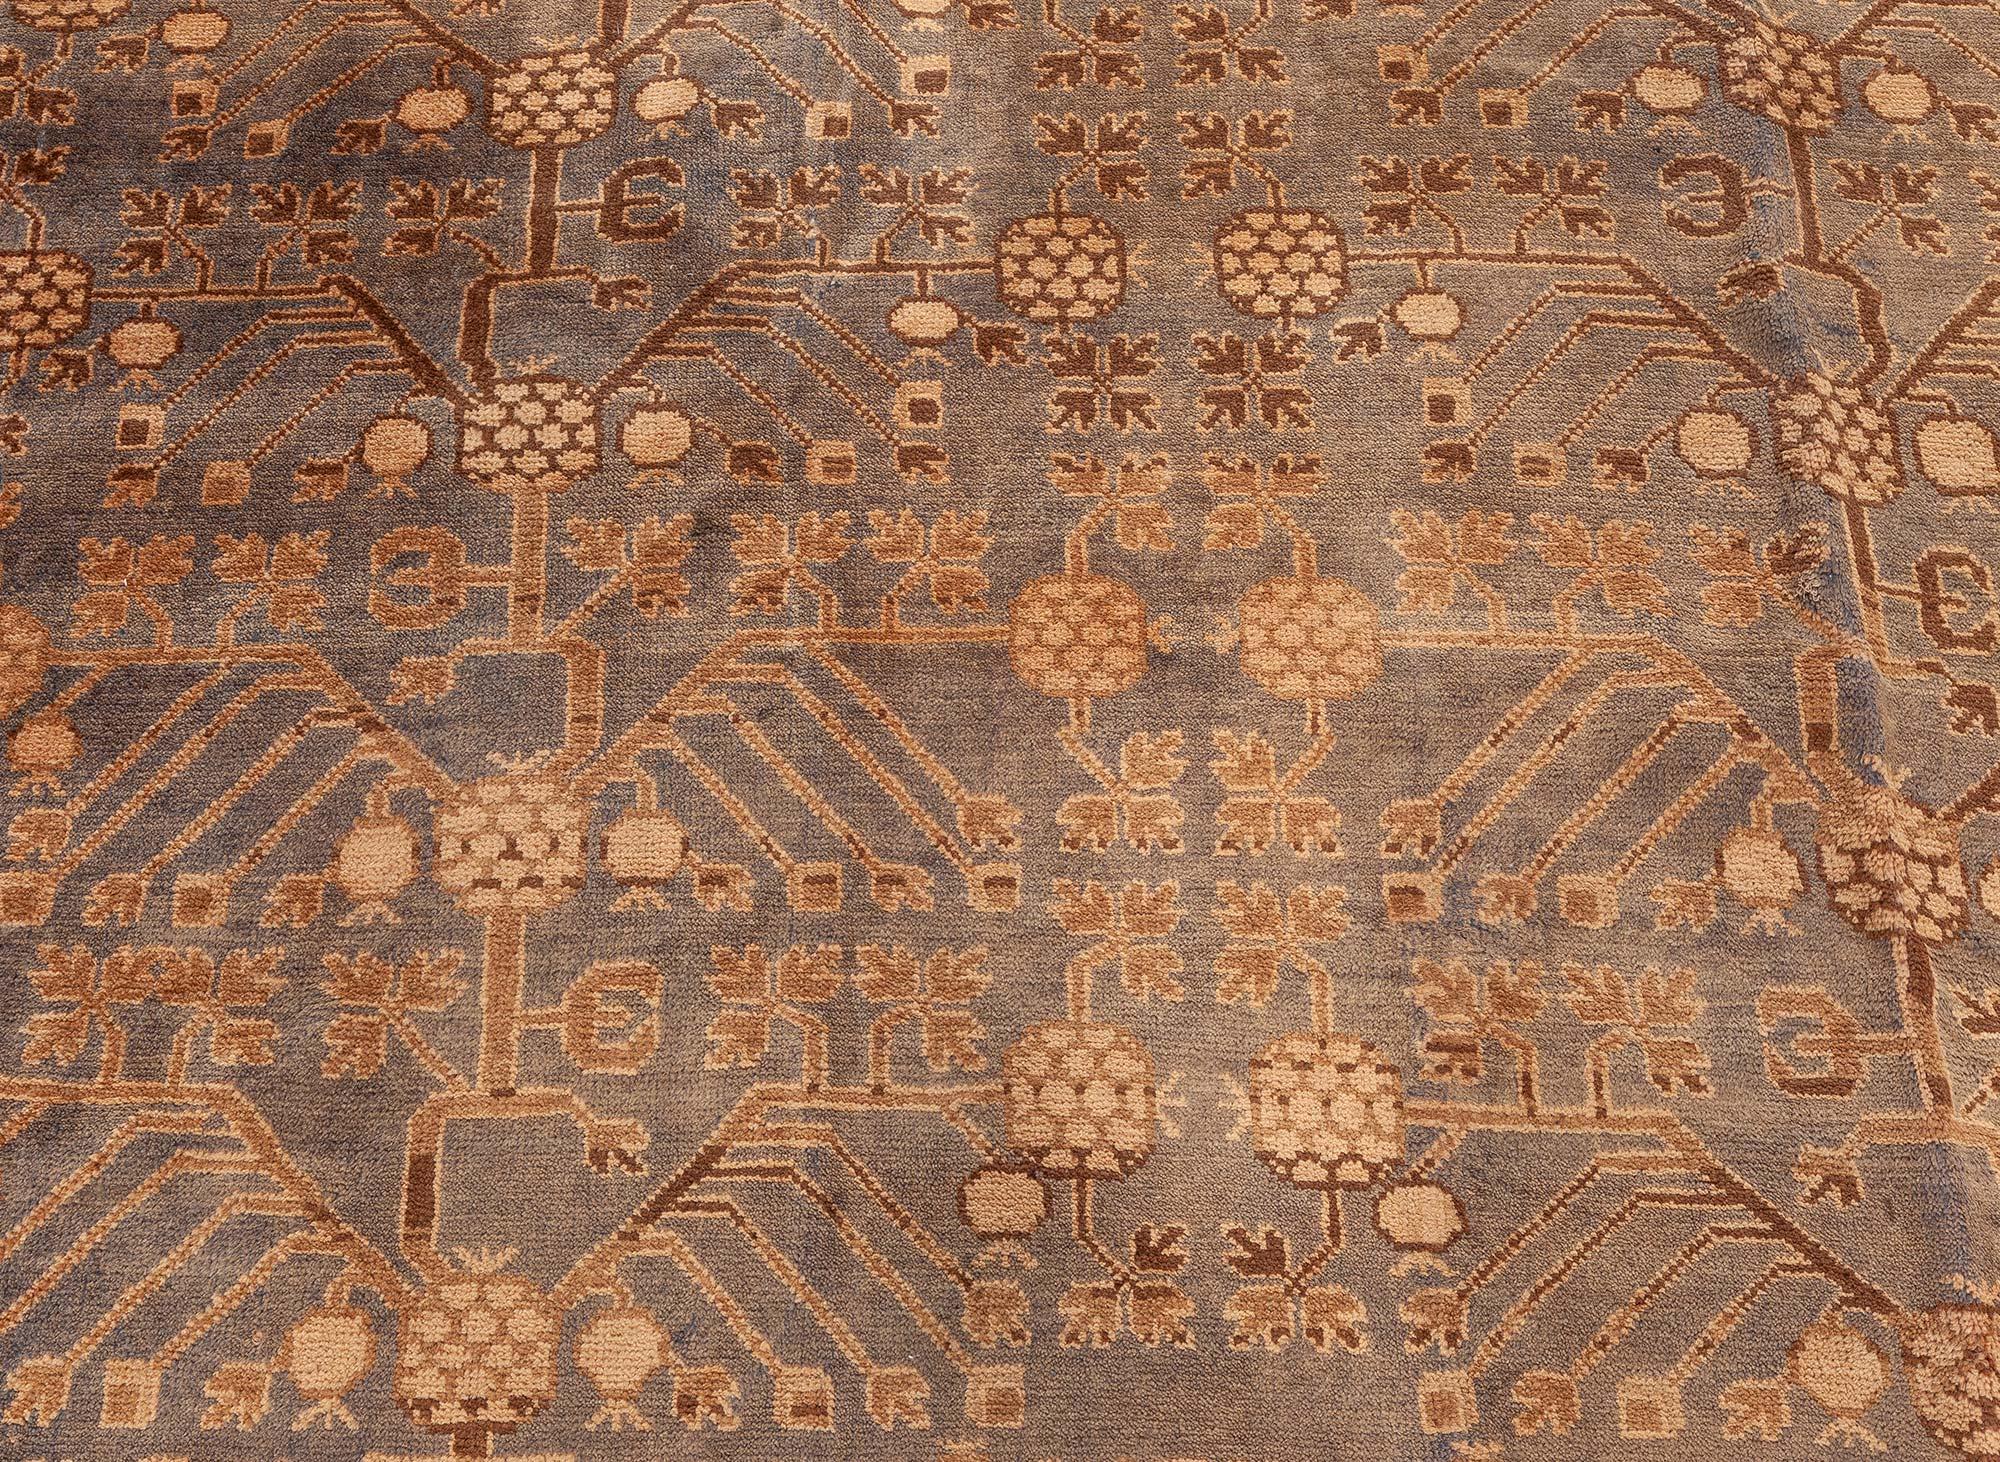 Fine Vintage Samarkand (Khotan) Handmade Wool Carpet
Size: 9'7